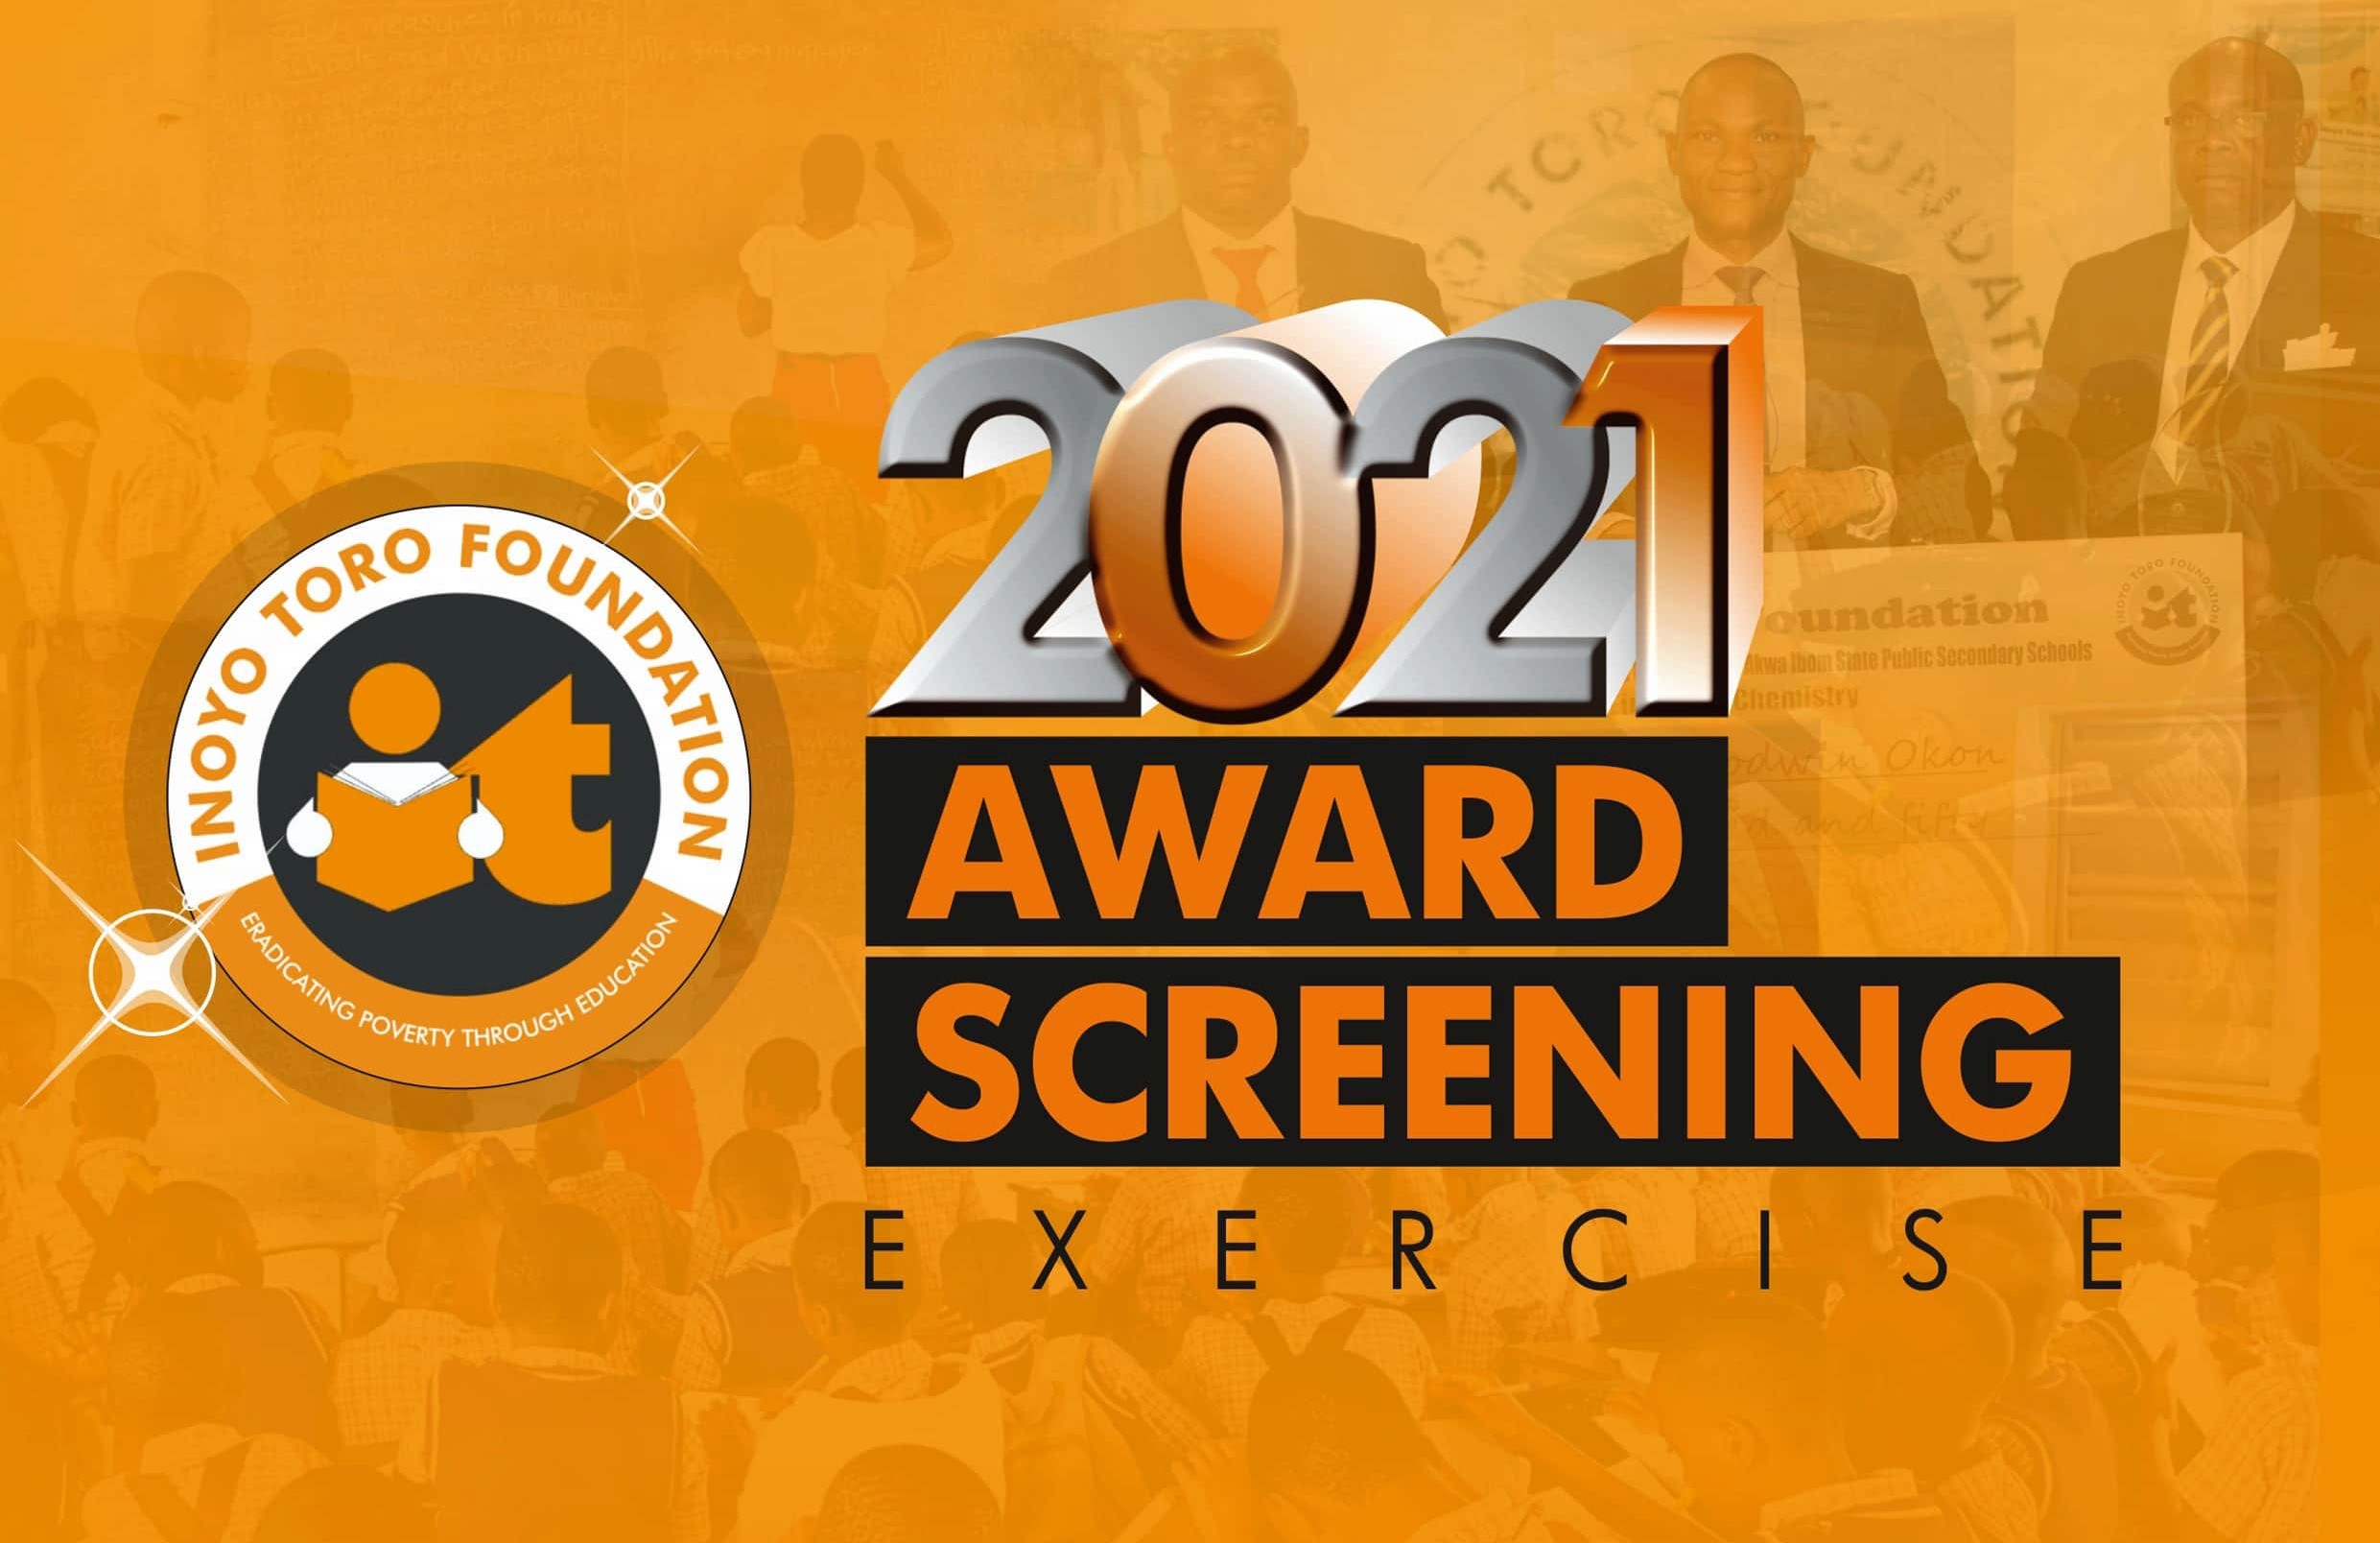 2021 Award Screening Exercise poster